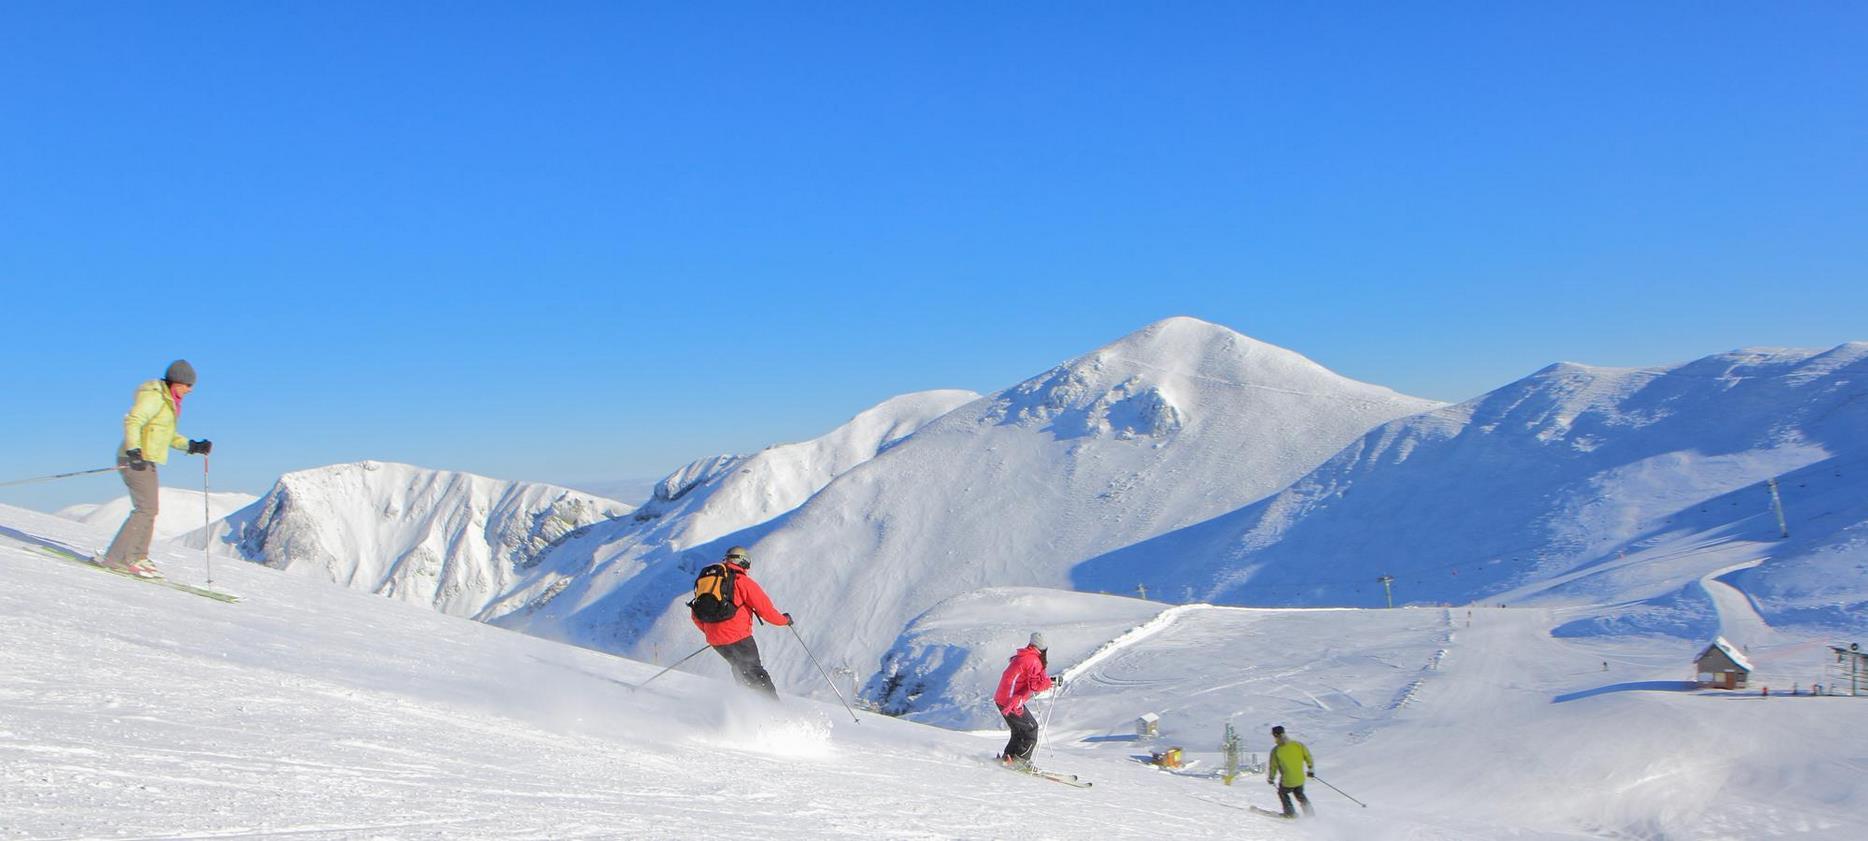 Super Besse - Mont Dore ski resort - Alpine skiing